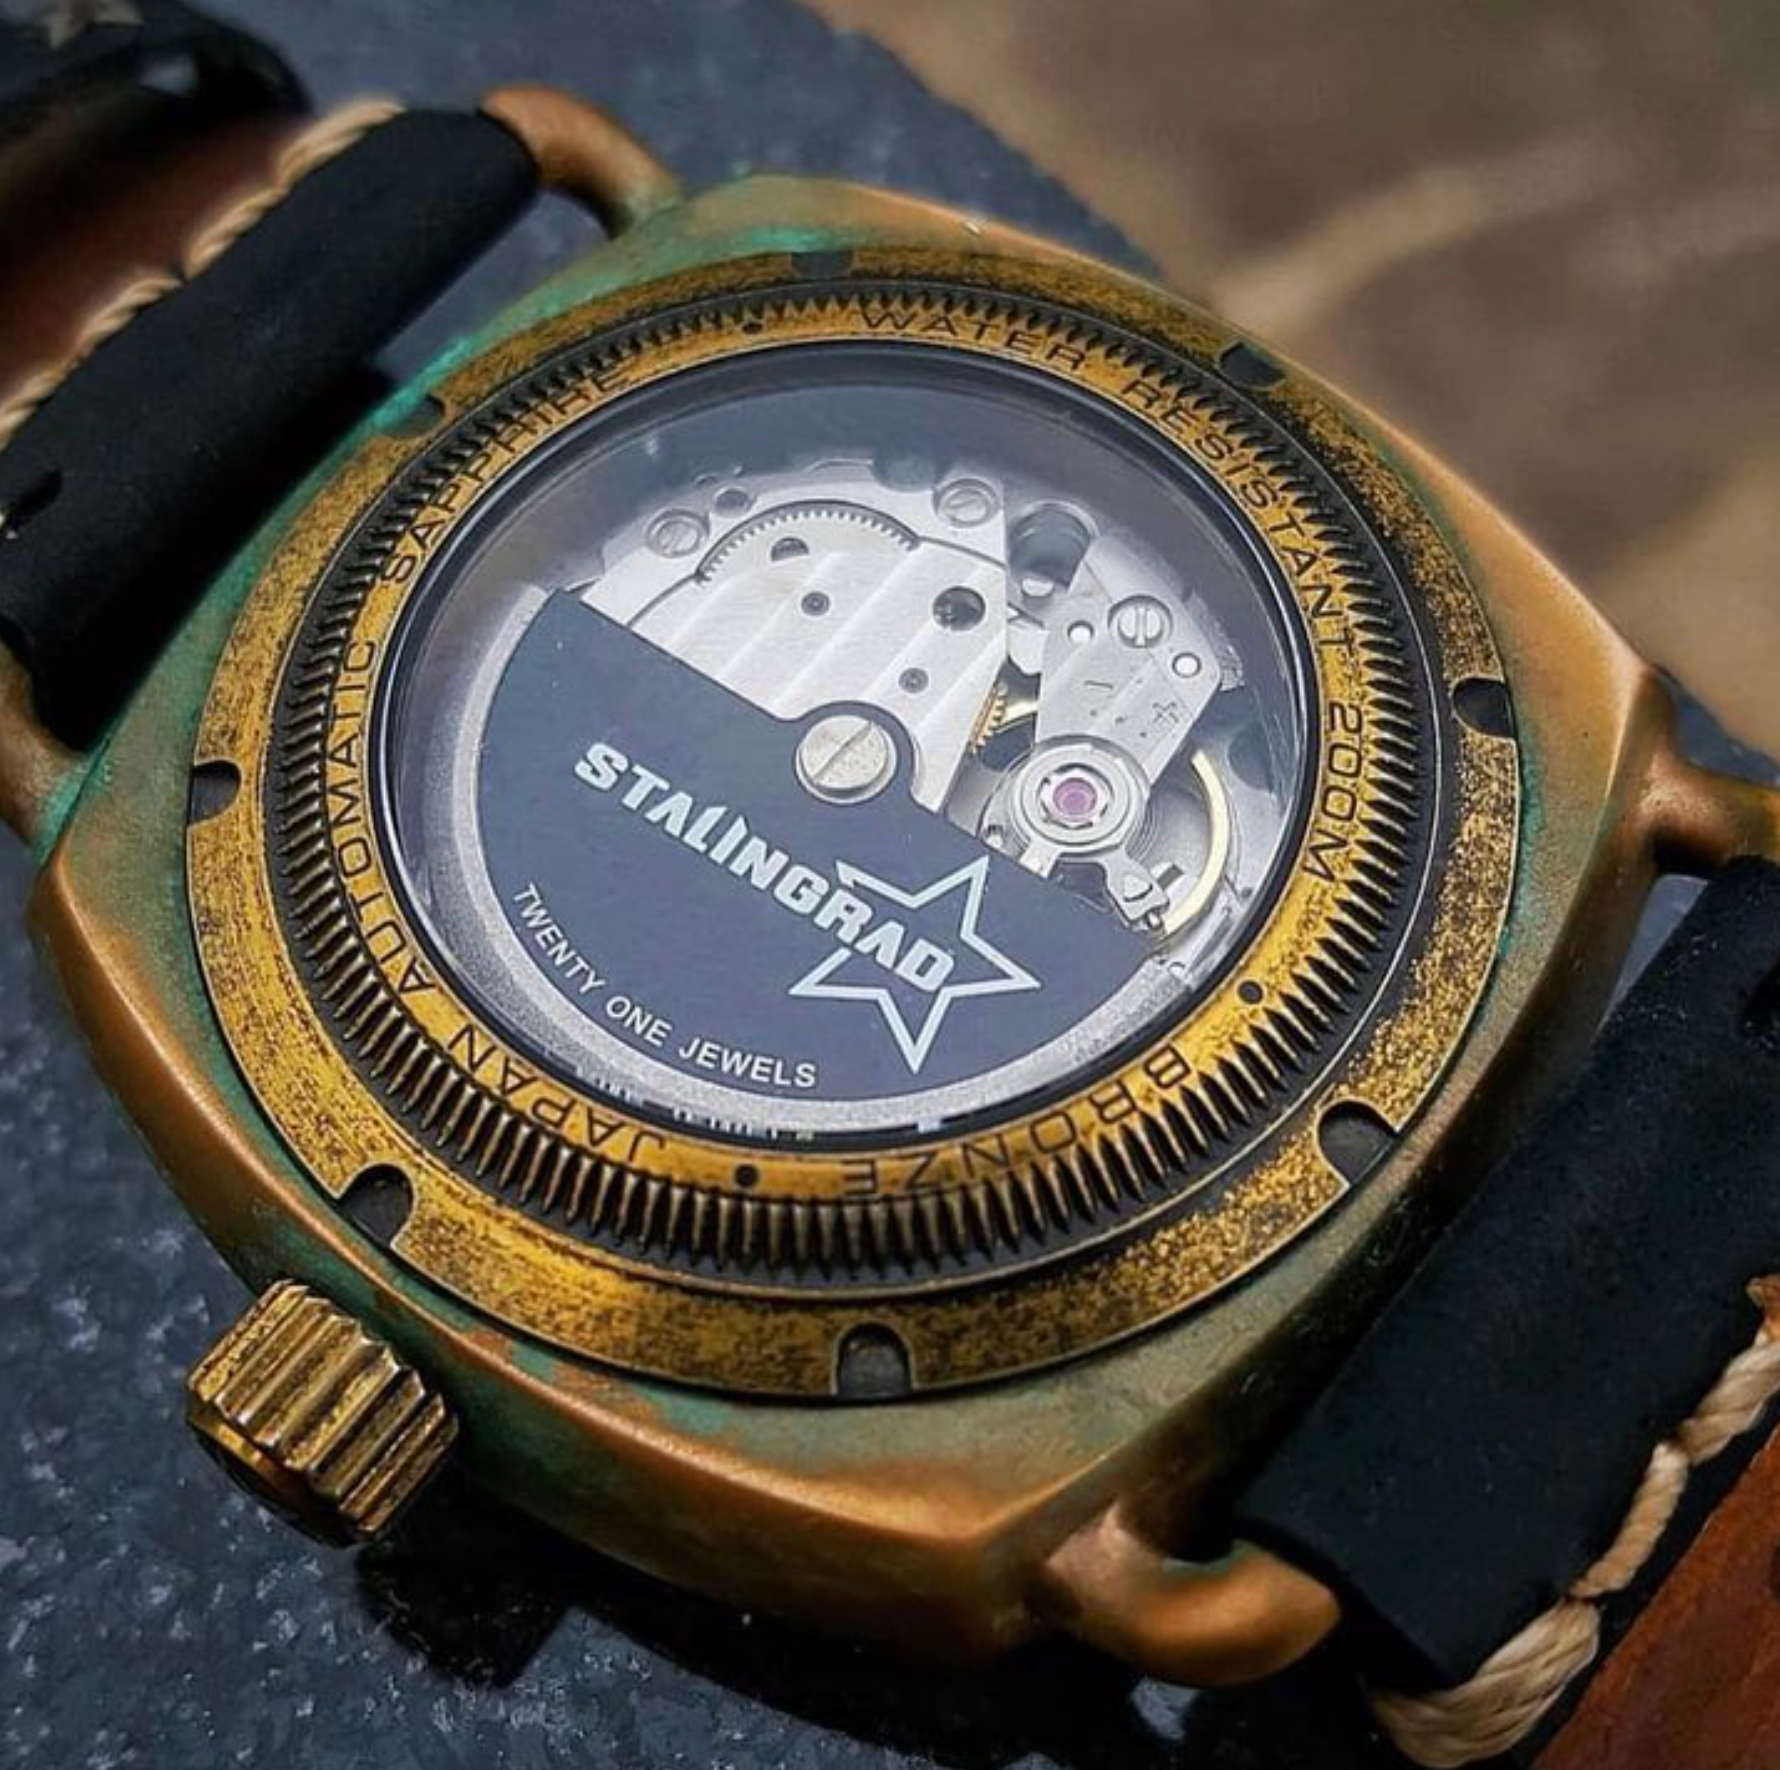 Bronze Watch display caseback showing automatic miyota movement and patina 